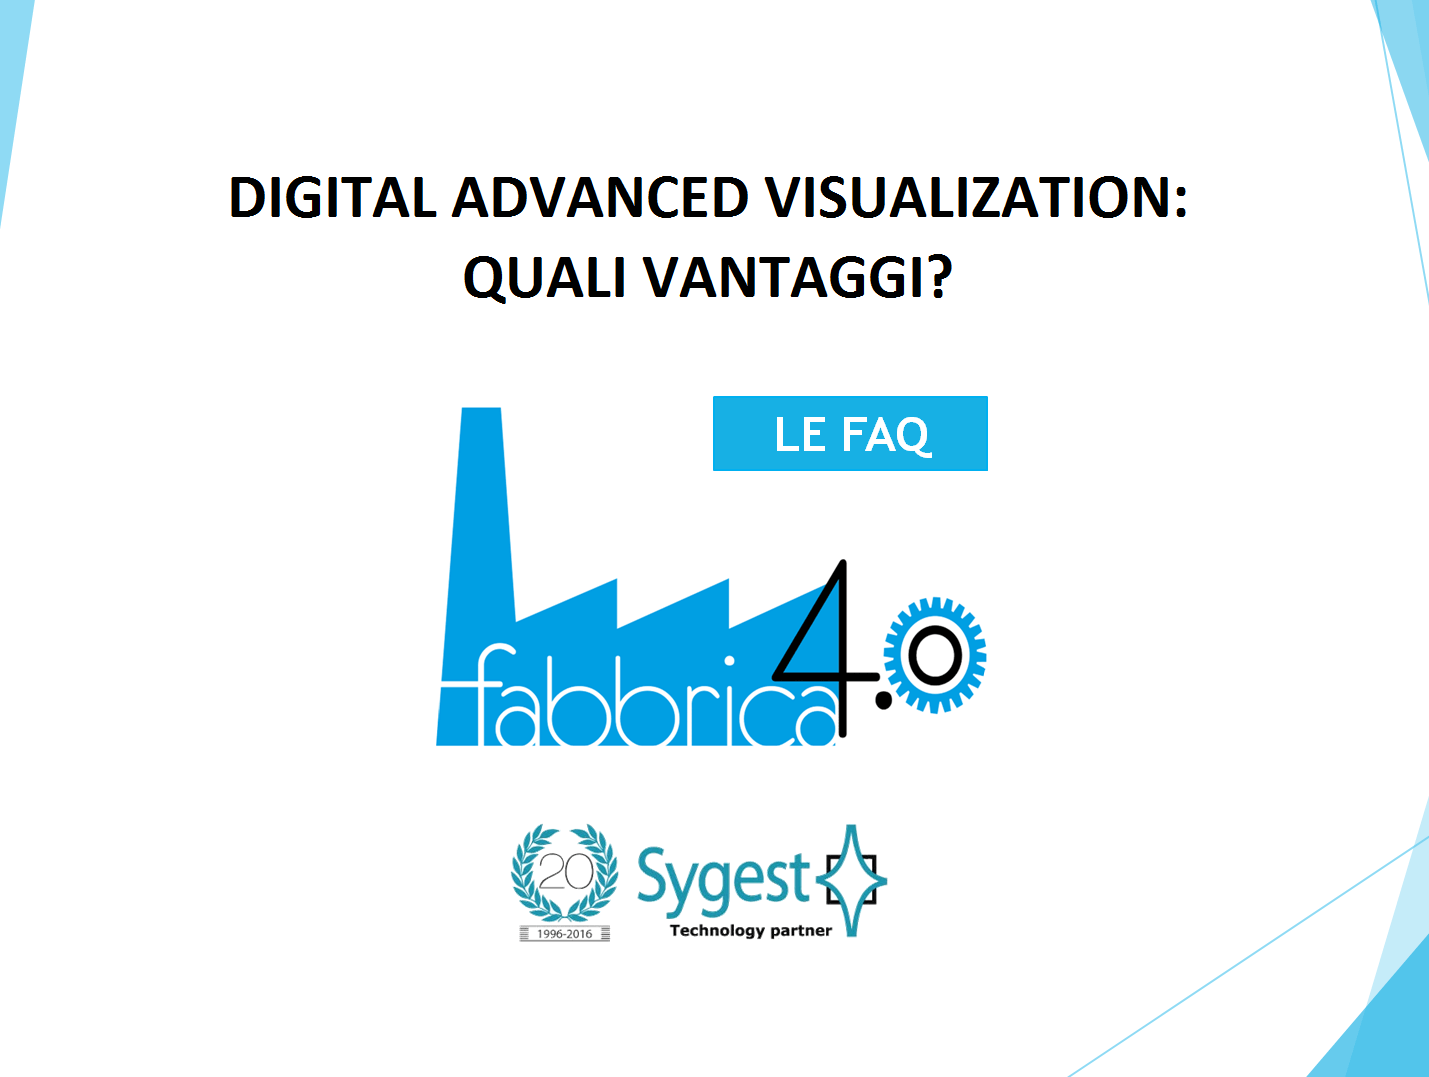 Digital Advanced Visualization - Fabbrica 4.0